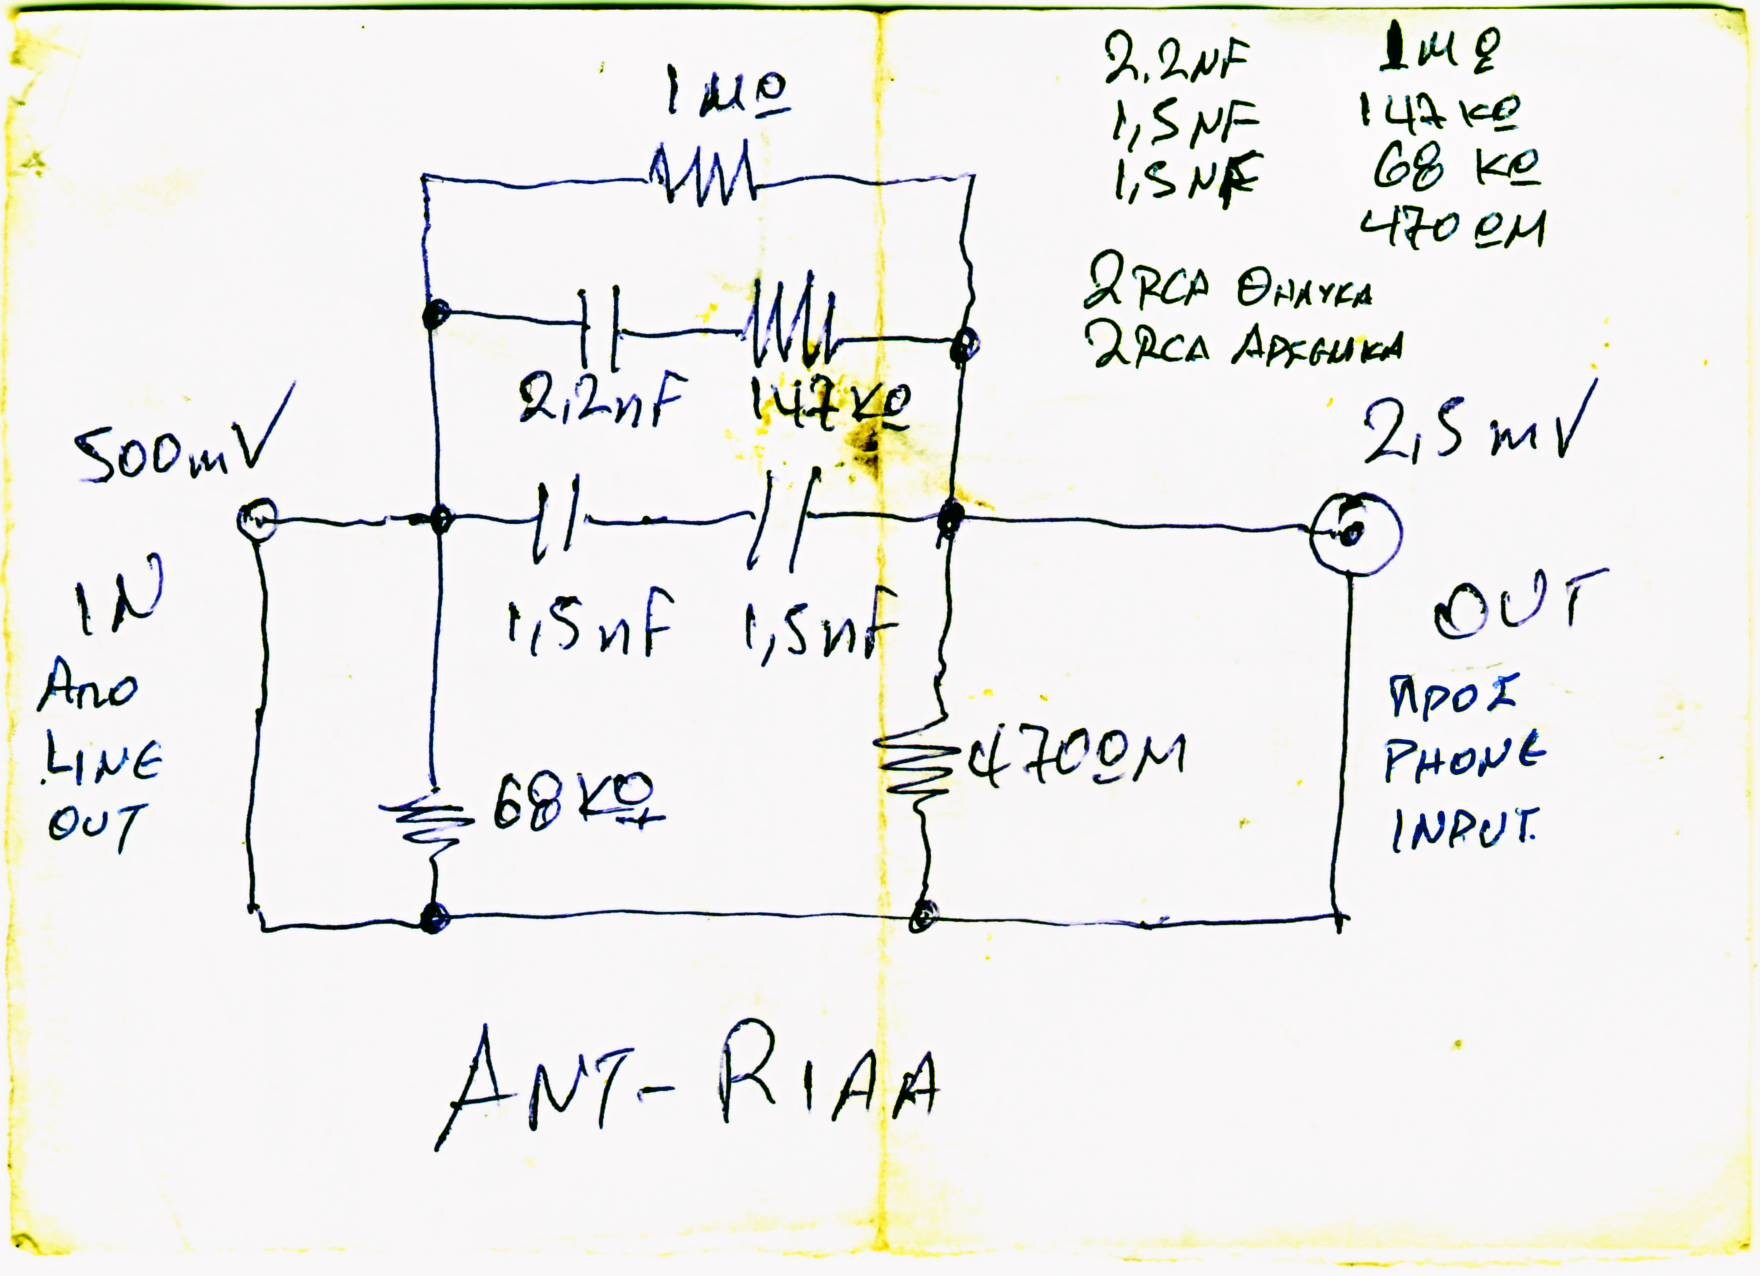 anti riaa filter  anti riaa filter 
line out to phone input